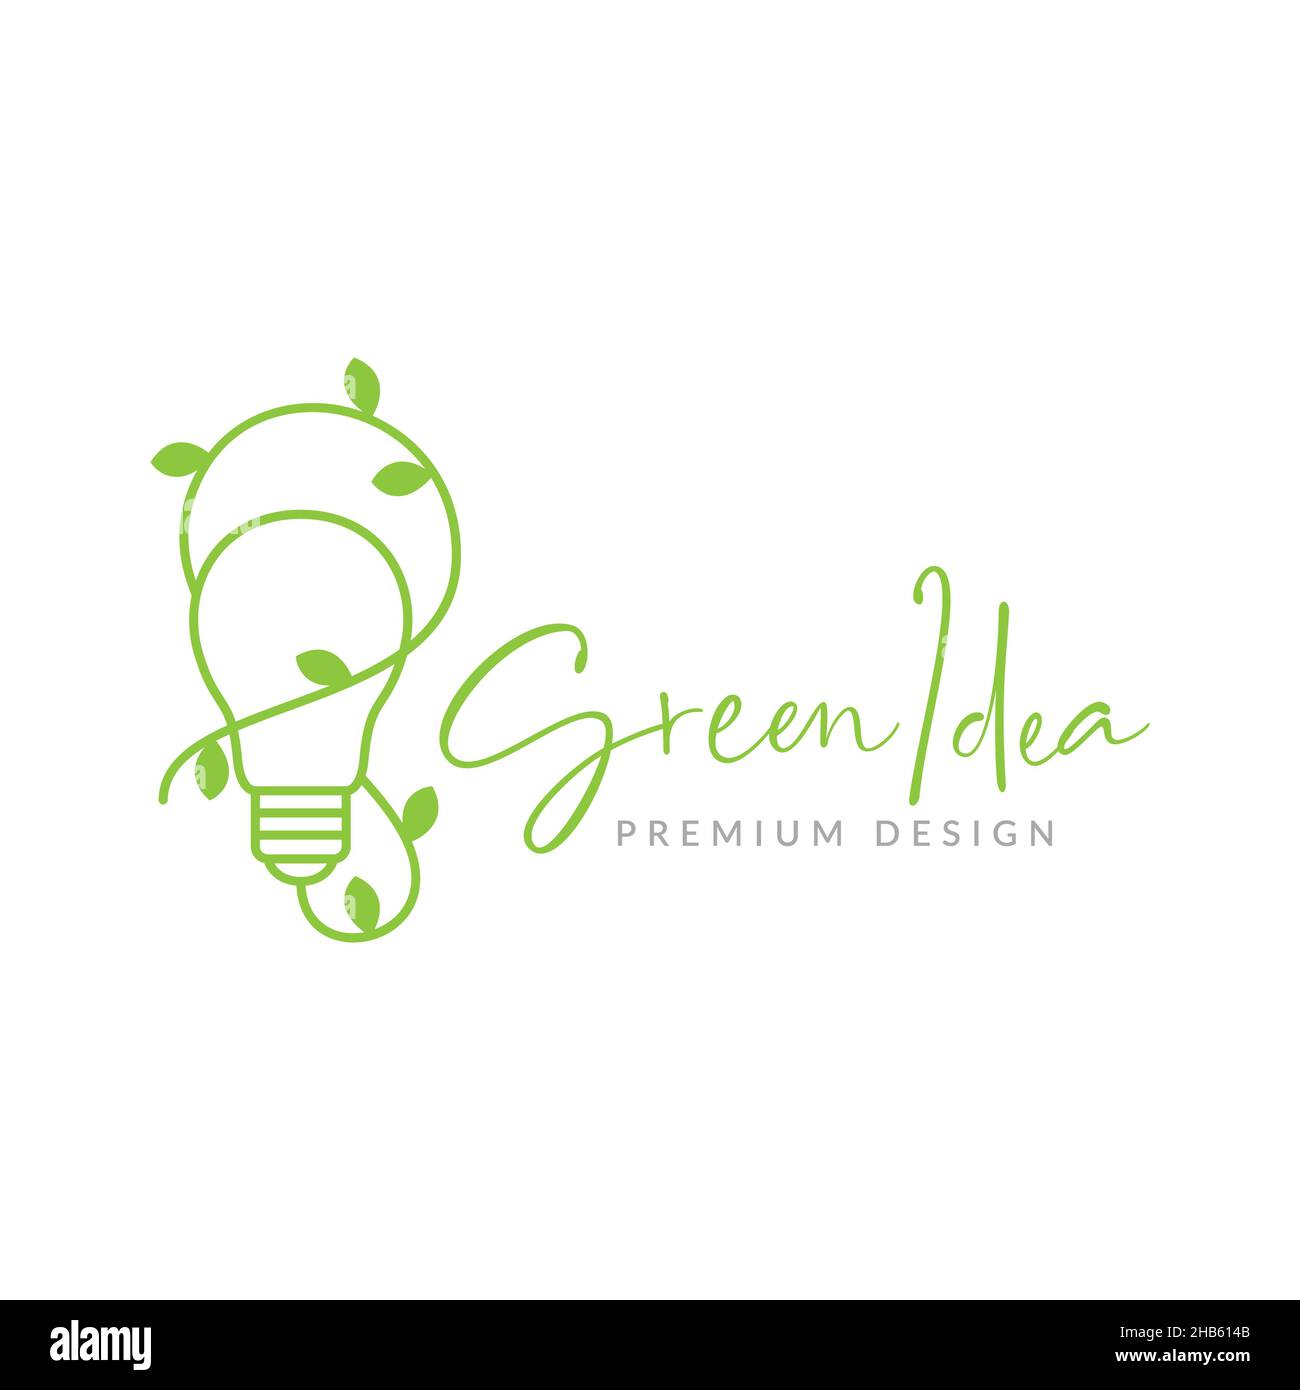 Linie grüne Lampe mit Weinstock Blatt Logo Design Vektor Grafik Symbol Symbol Zeichen Illustration kreative Idee Stock Vektor